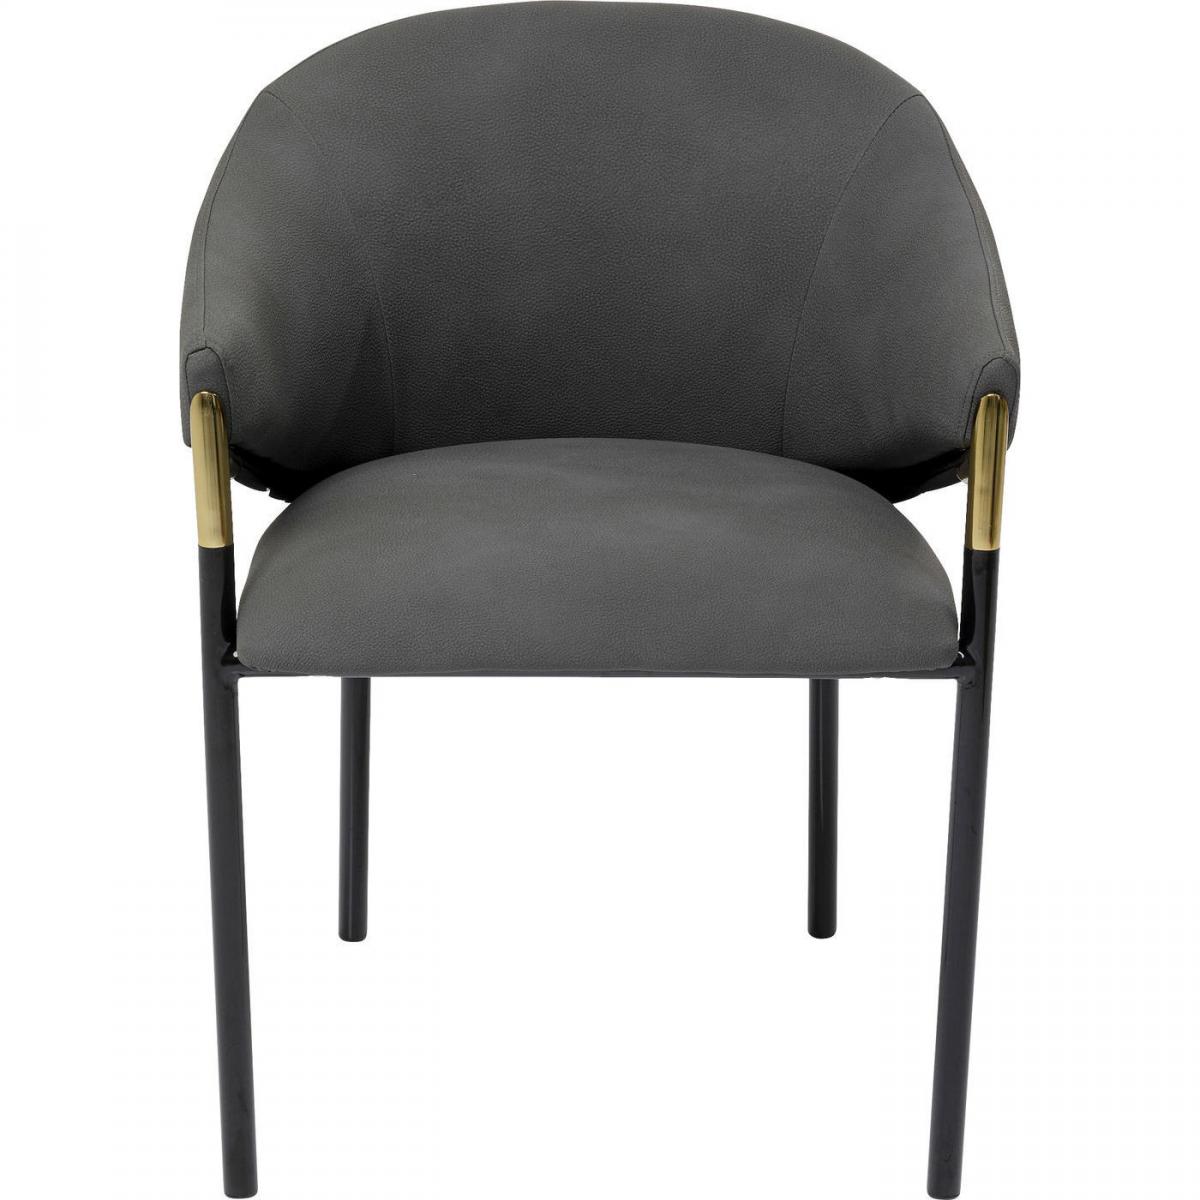 Karedesign - Chaise avec accoudoirs Boulevard grise Kare Design - Chaises